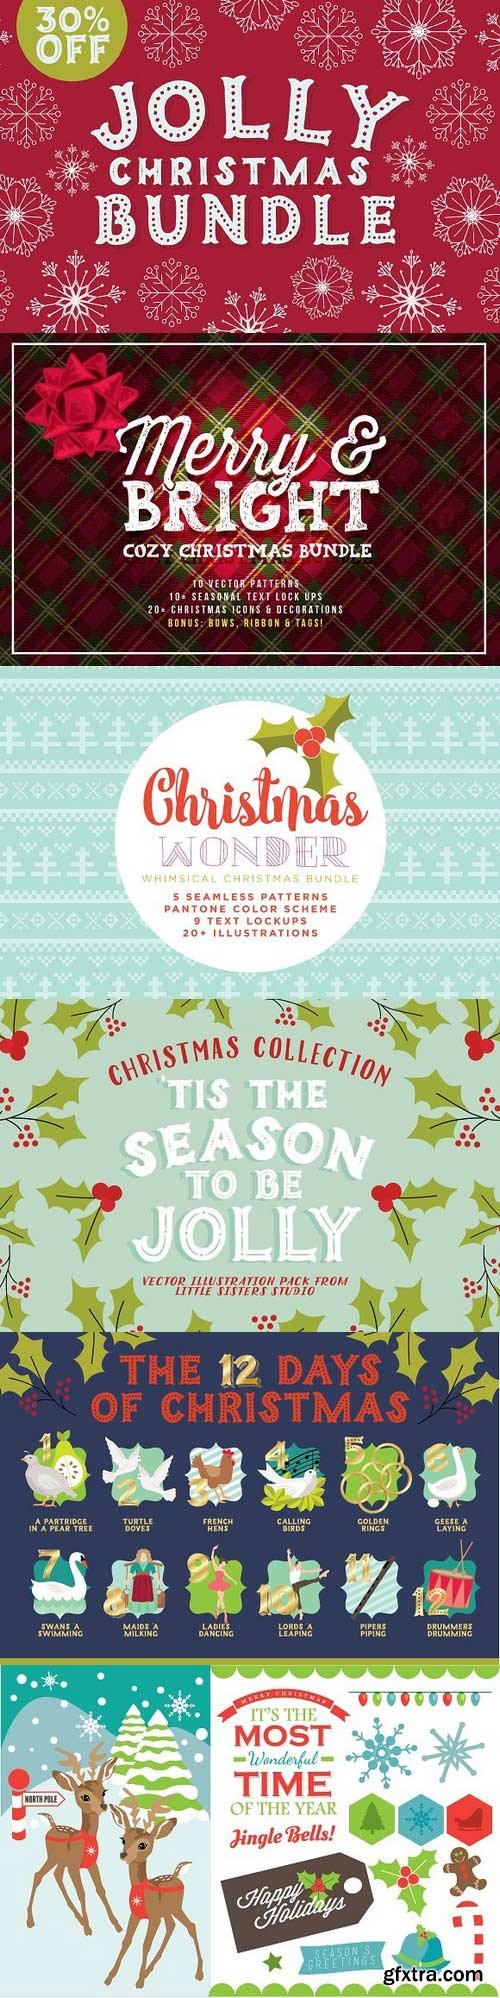 CM - Jolly Christmas Bundle 803598